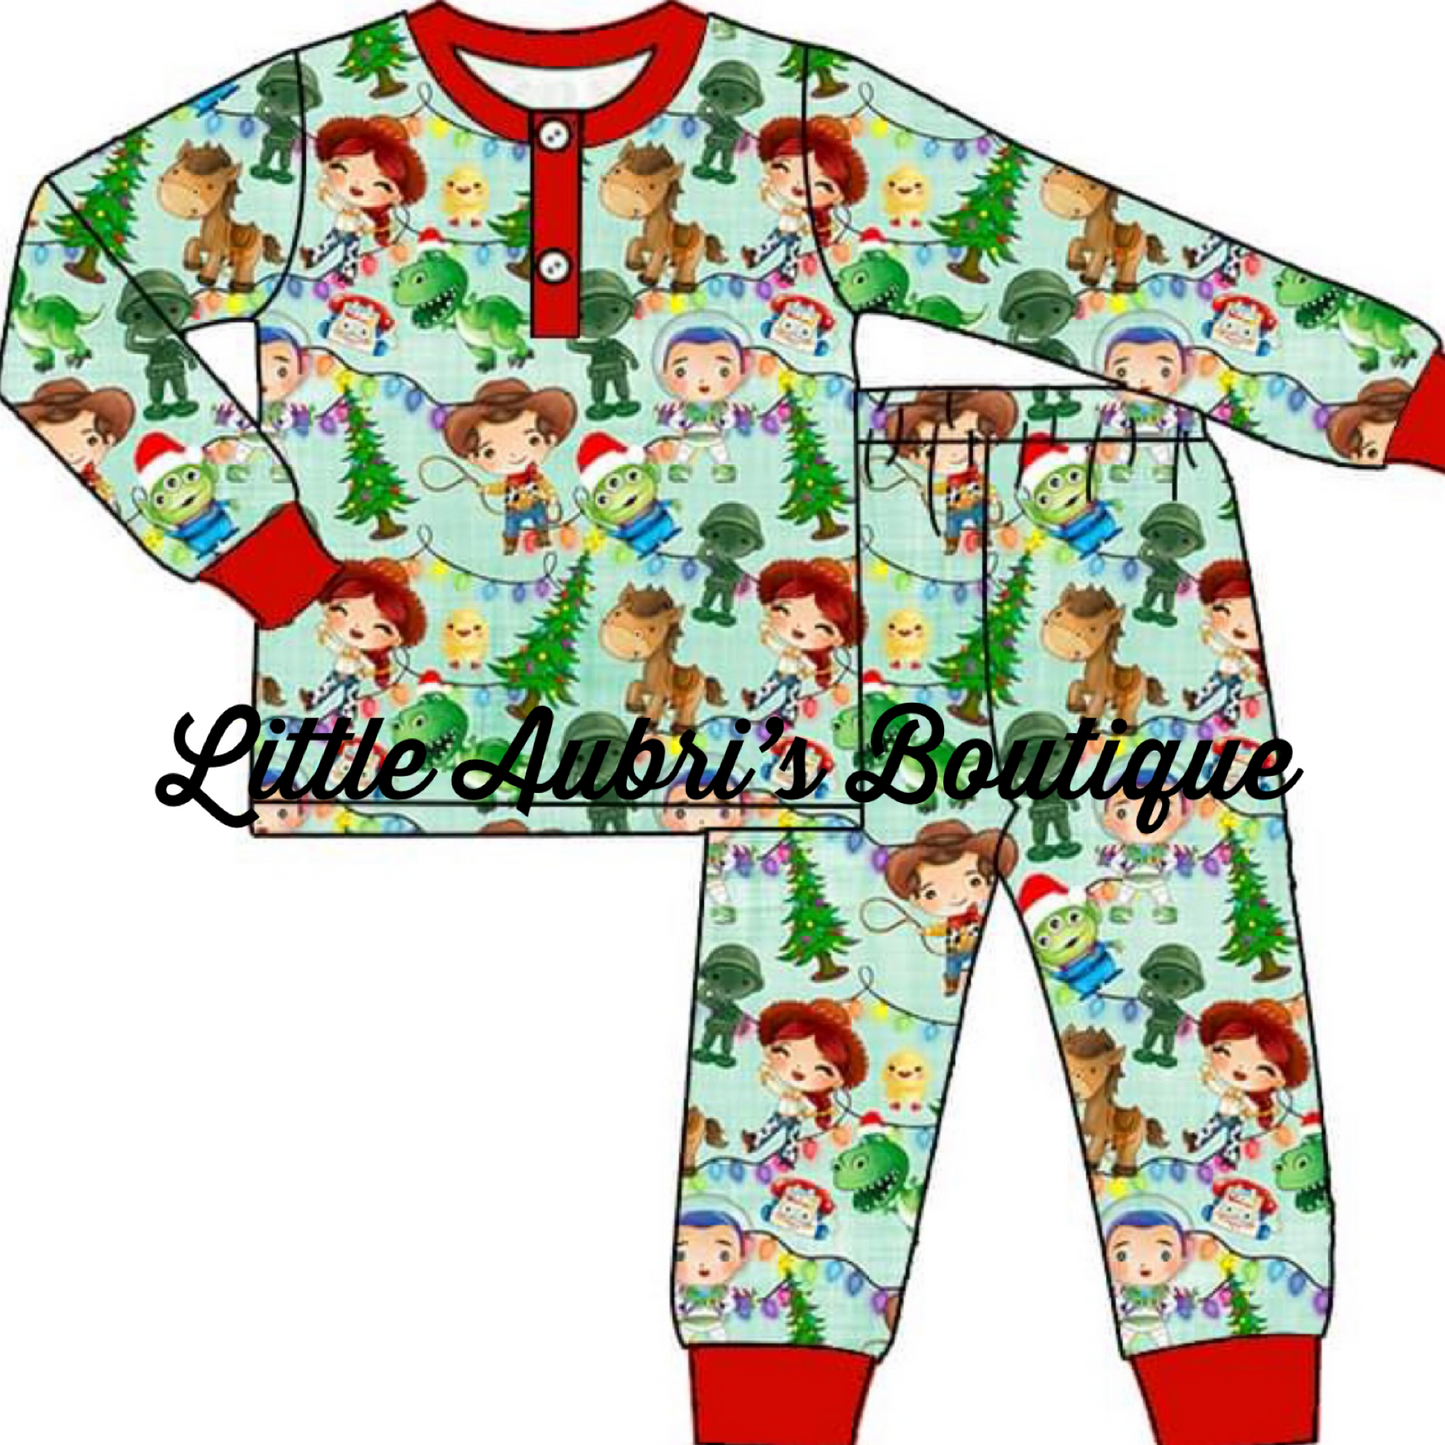 PREORDER Festive Toys Adult Pajama Set CLOSES 8/12